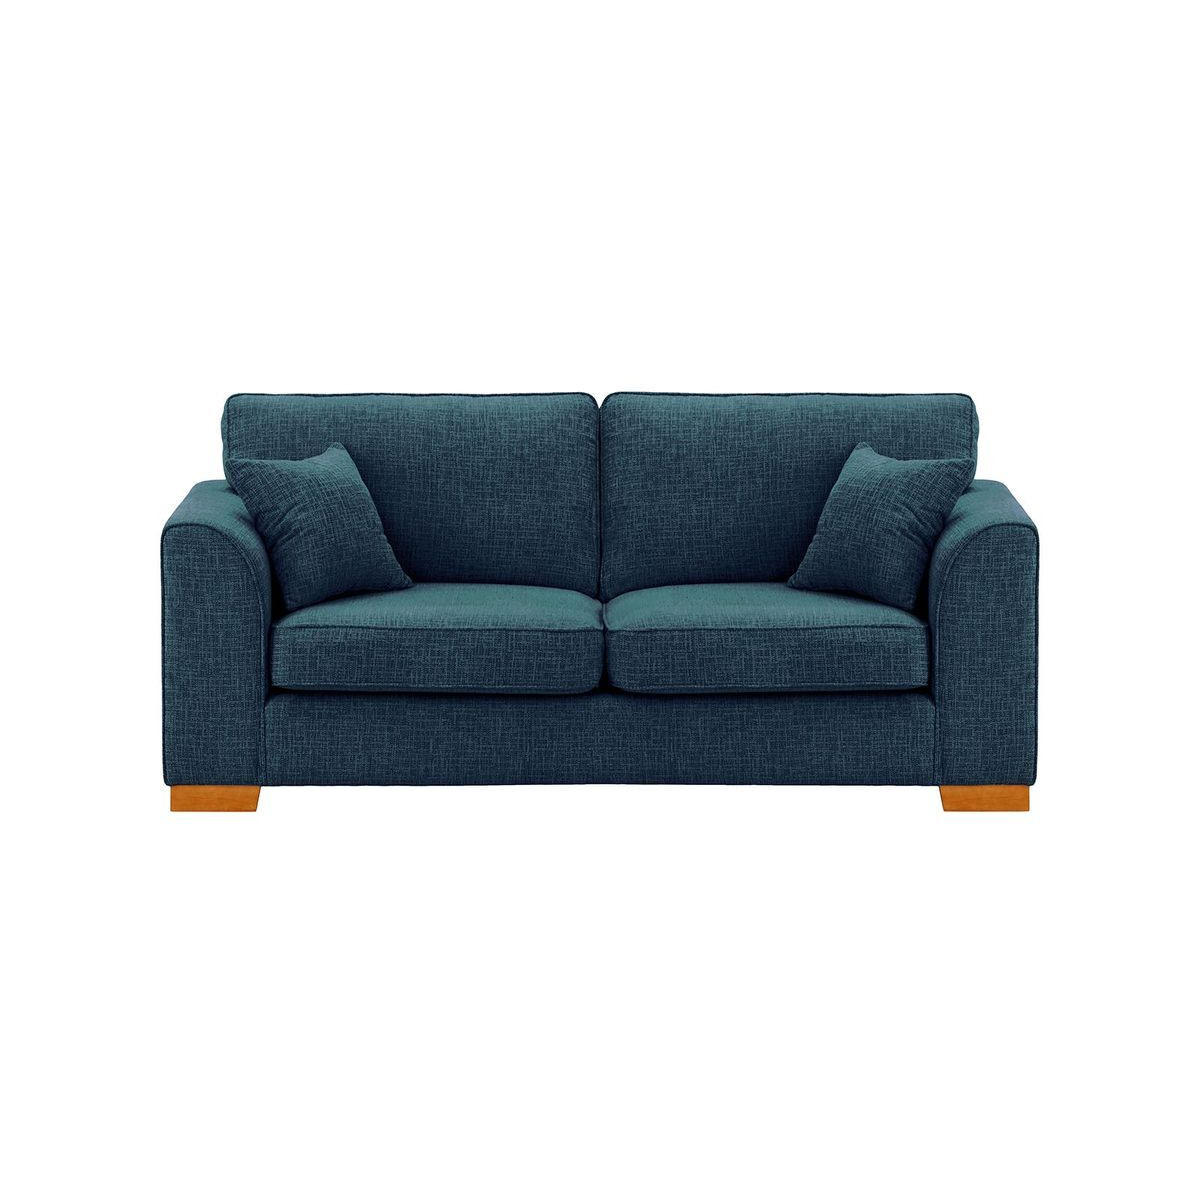 Avos 3 Seater Sofa, teal, Leg colour: aveo - image 1